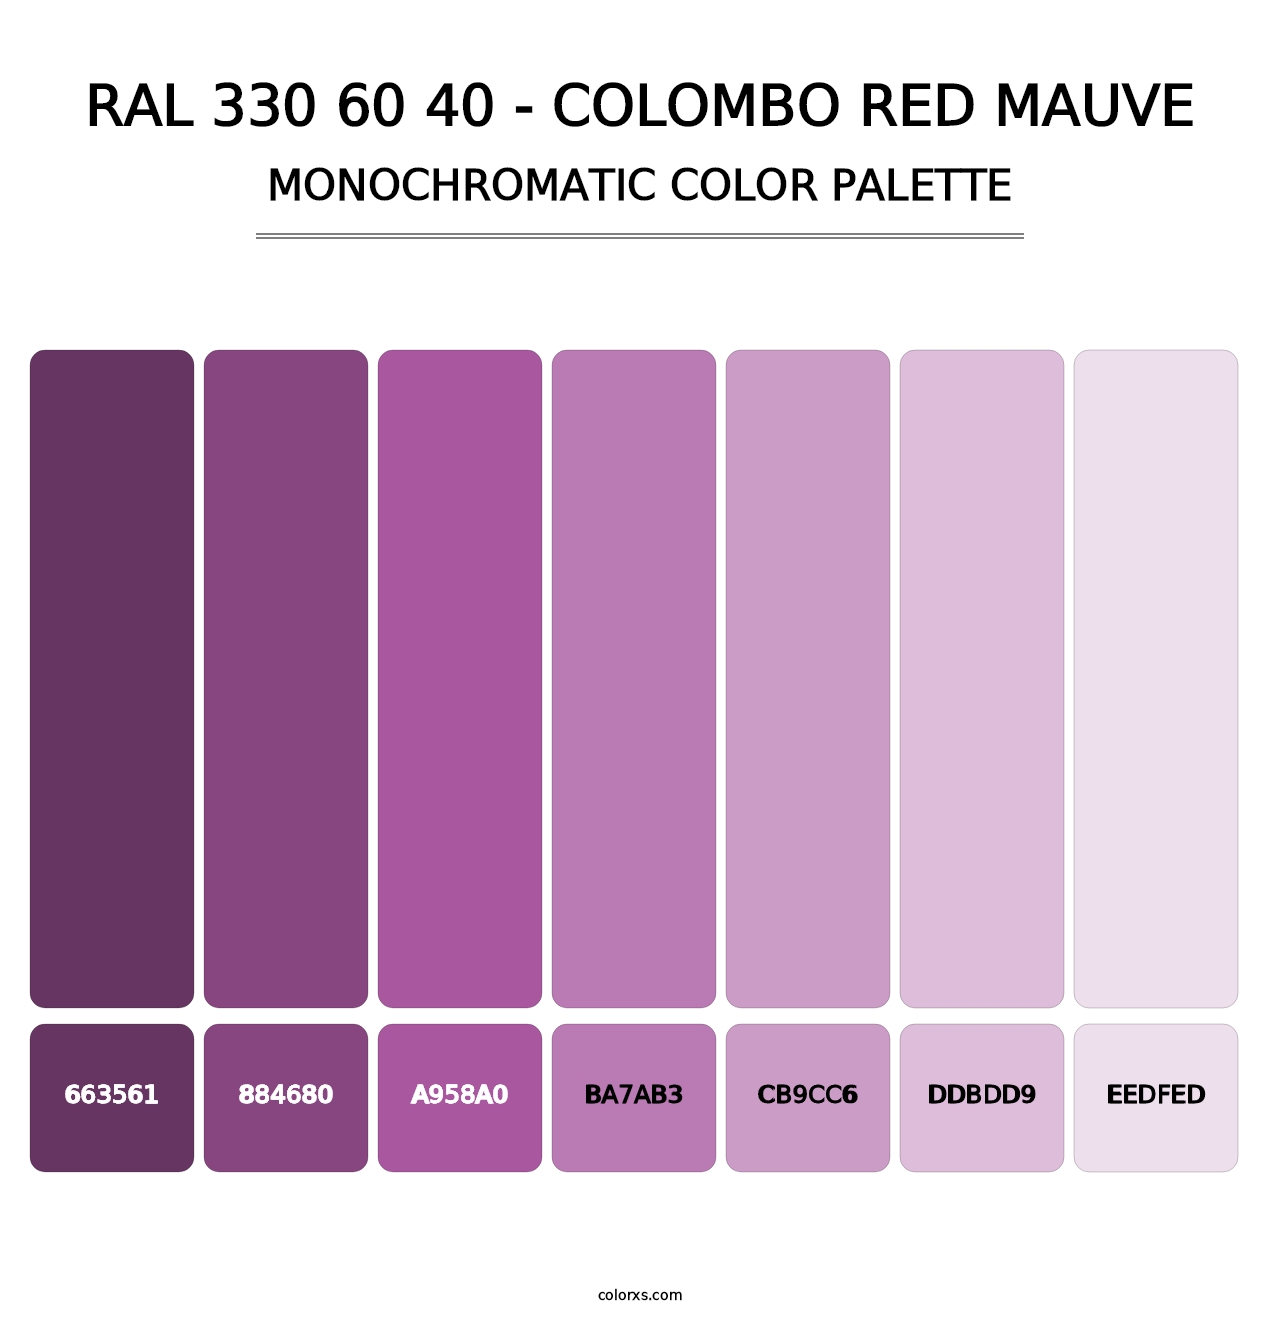 RAL 330 60 40 - Colombo Red Mauve - Monochromatic Color Palette